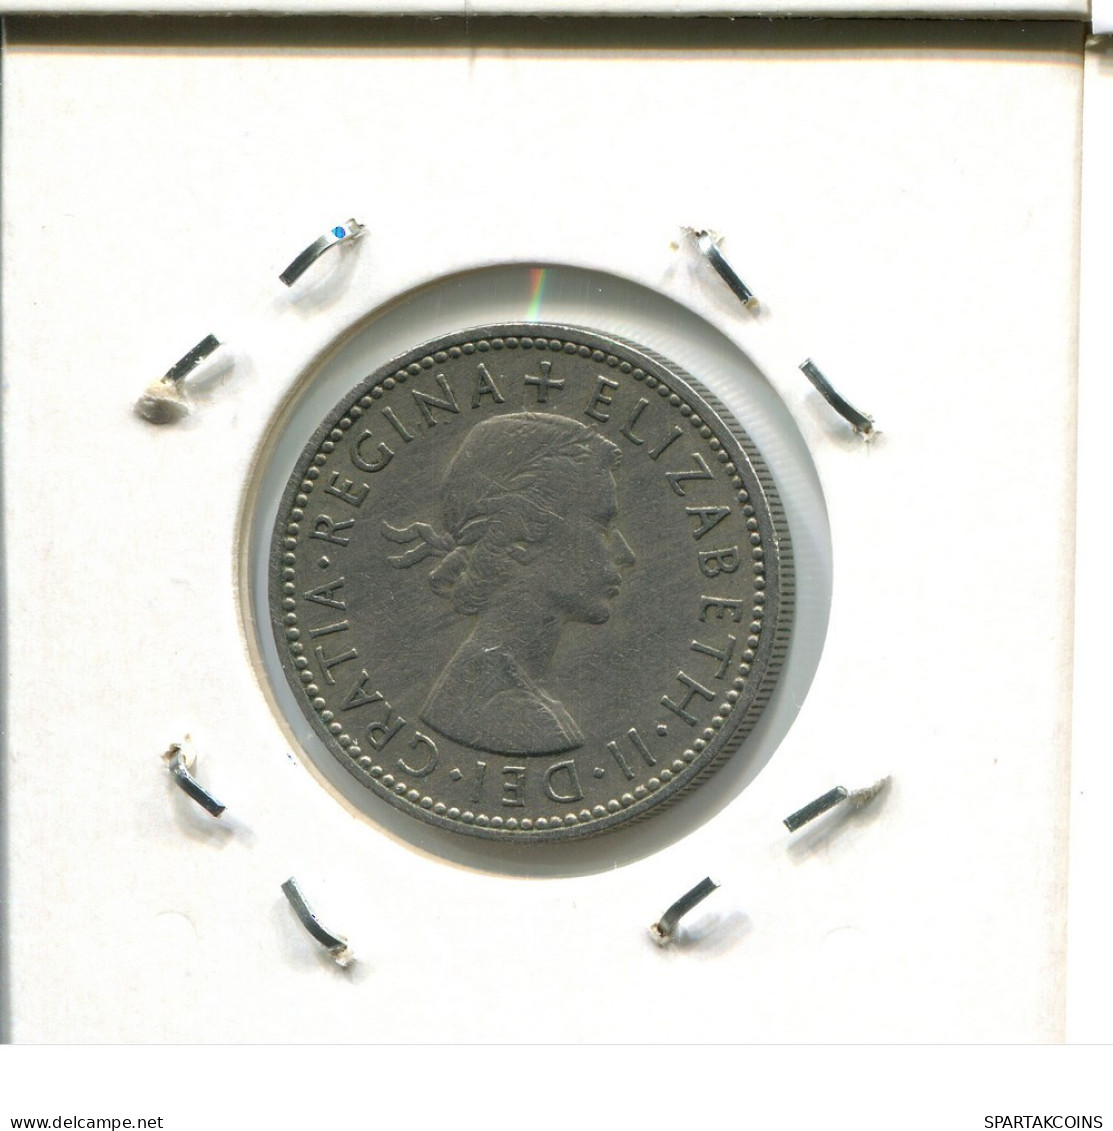 SHILLING 1954 UK GBAN BRETAÑA GREAT BRITAIN Moneda #BB093.E.A - I. 1 Shilling